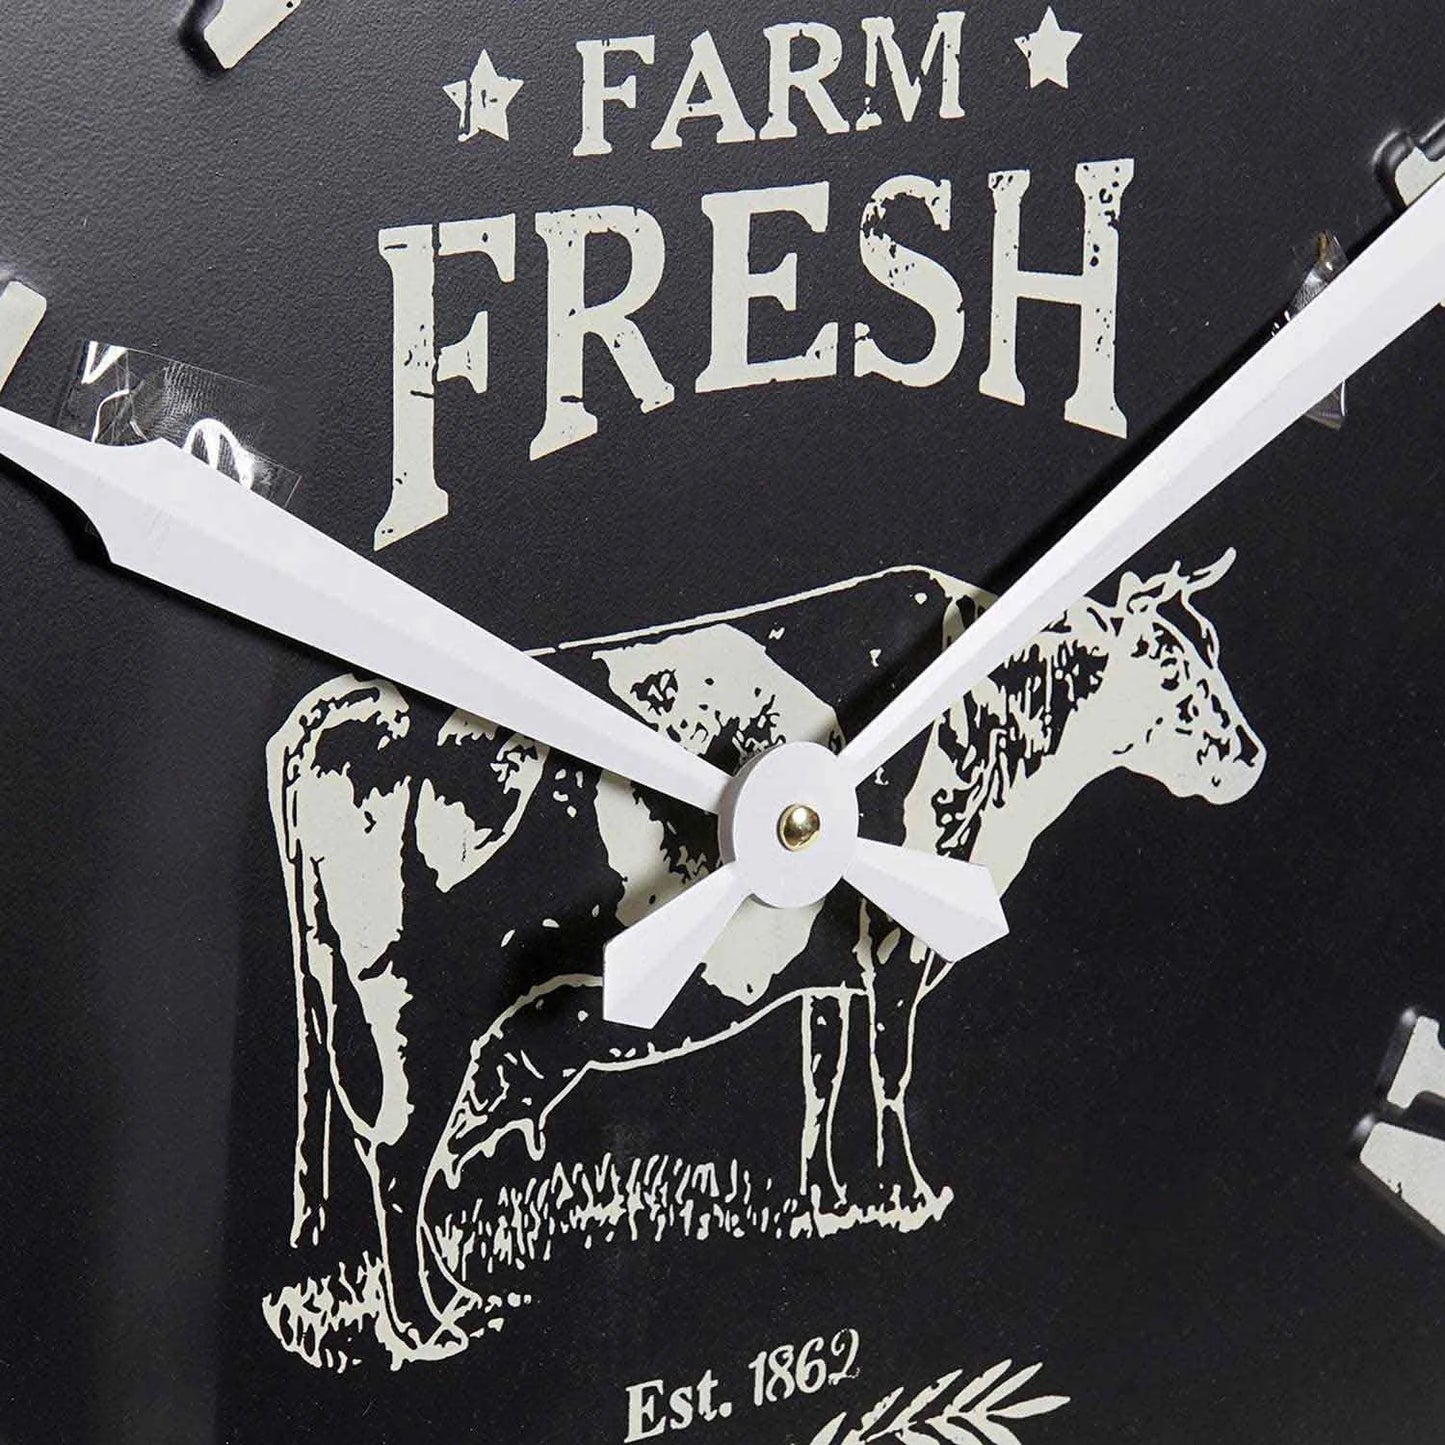 Lúzete - Reloj Pared Metal Mdf Farm Fresh